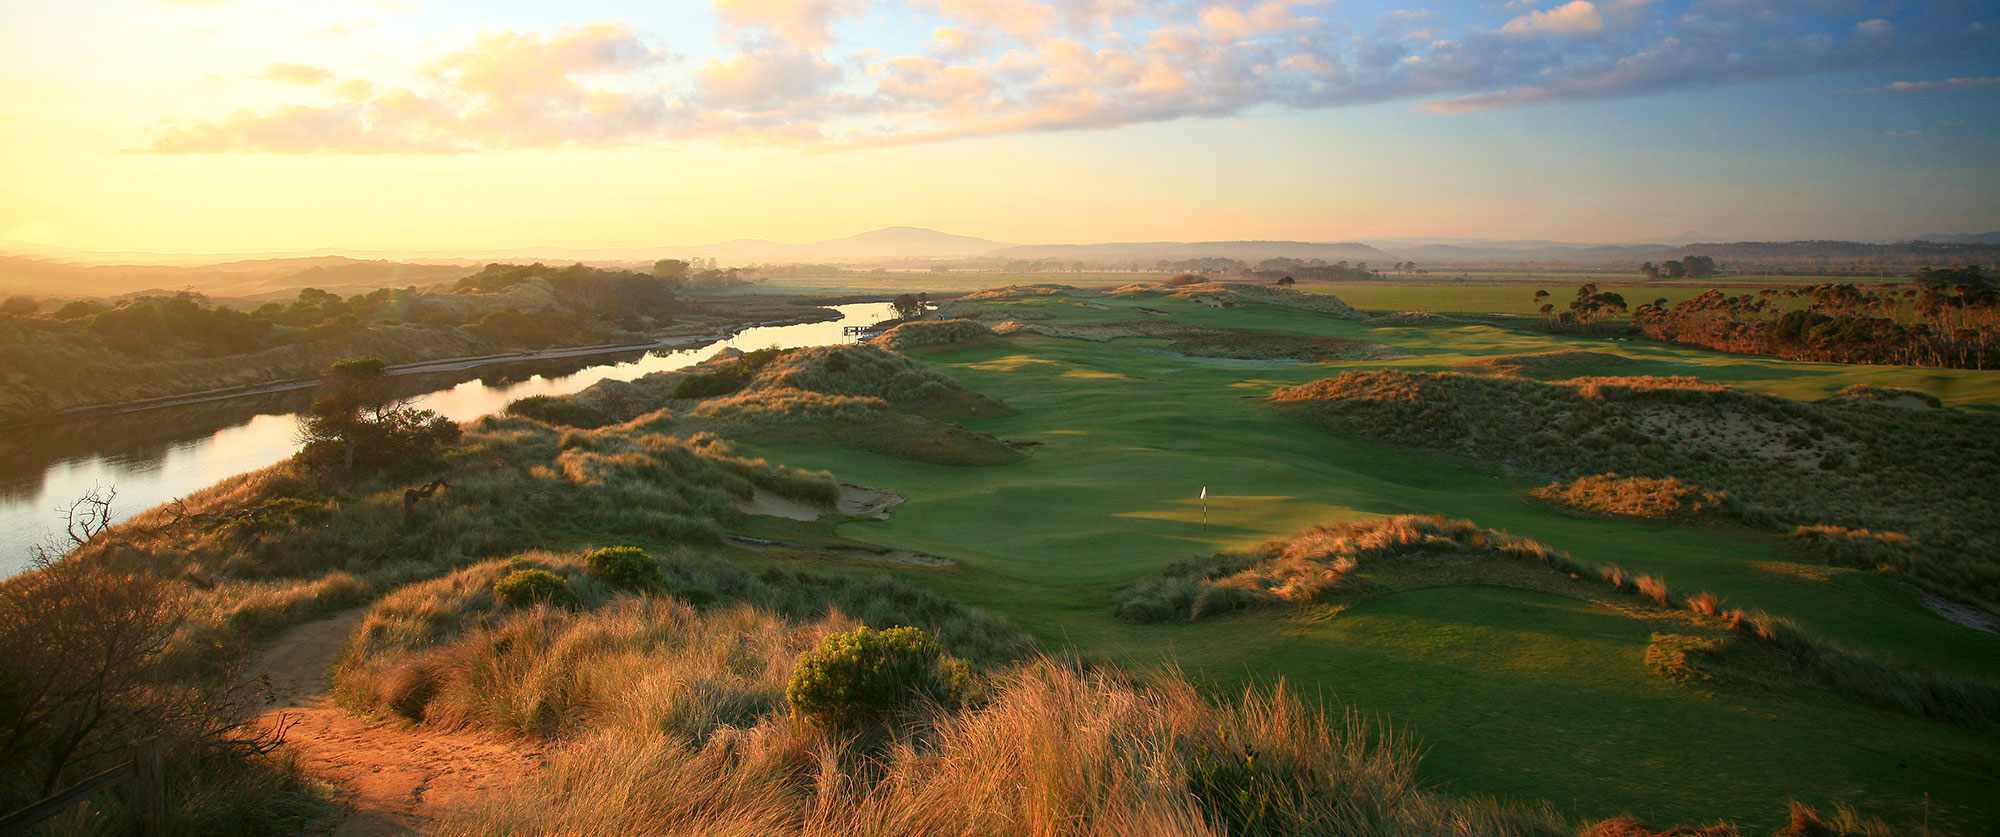 Australia Golf Vacations: Best Australian Golf Courses - Barnbougle Dunes